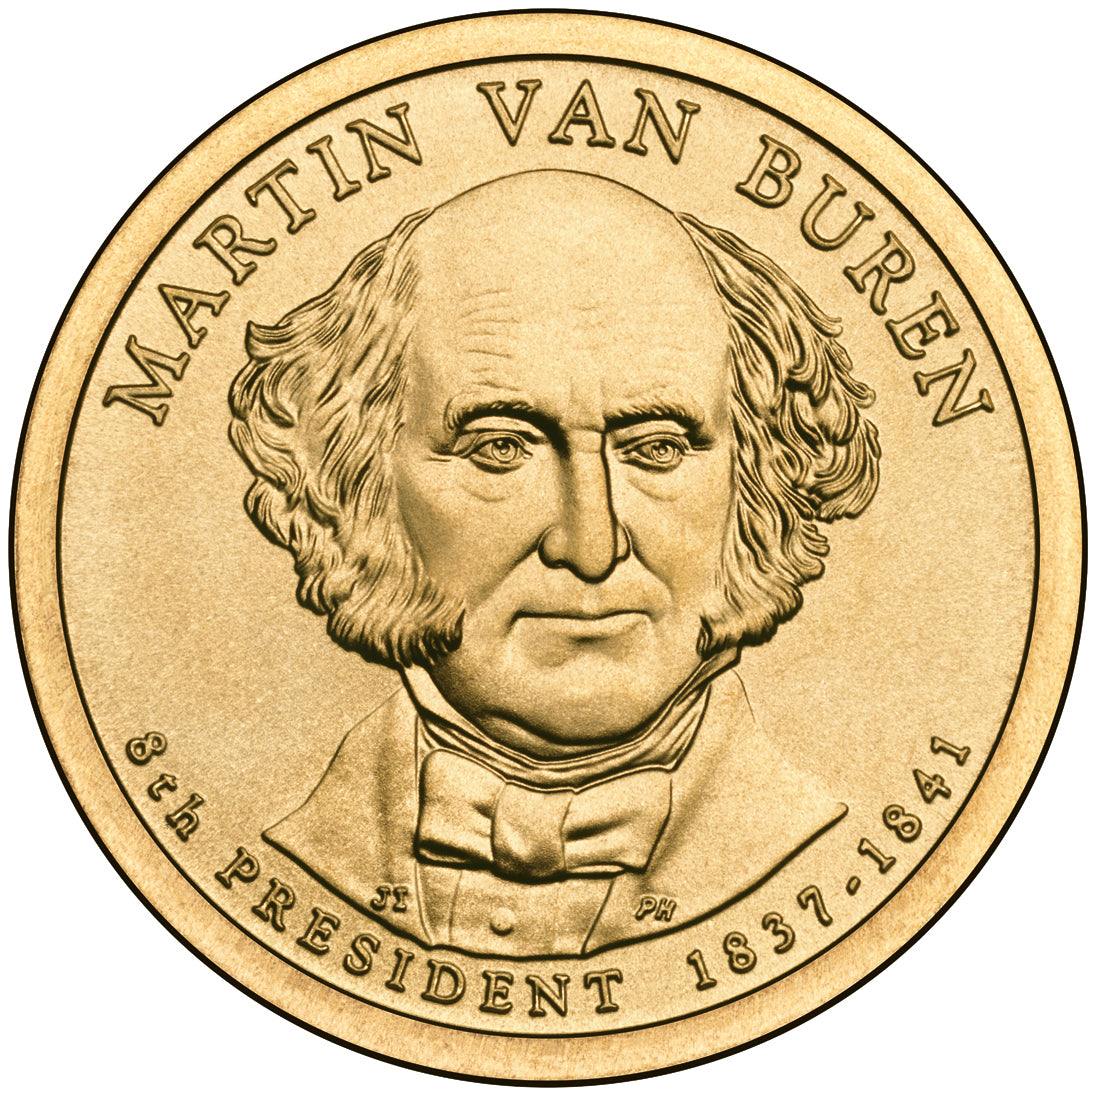 Martin Van Buren Presidential Dollar Lapel Pin, Uncirculated One Gold Dollar Coin Enamel Pin